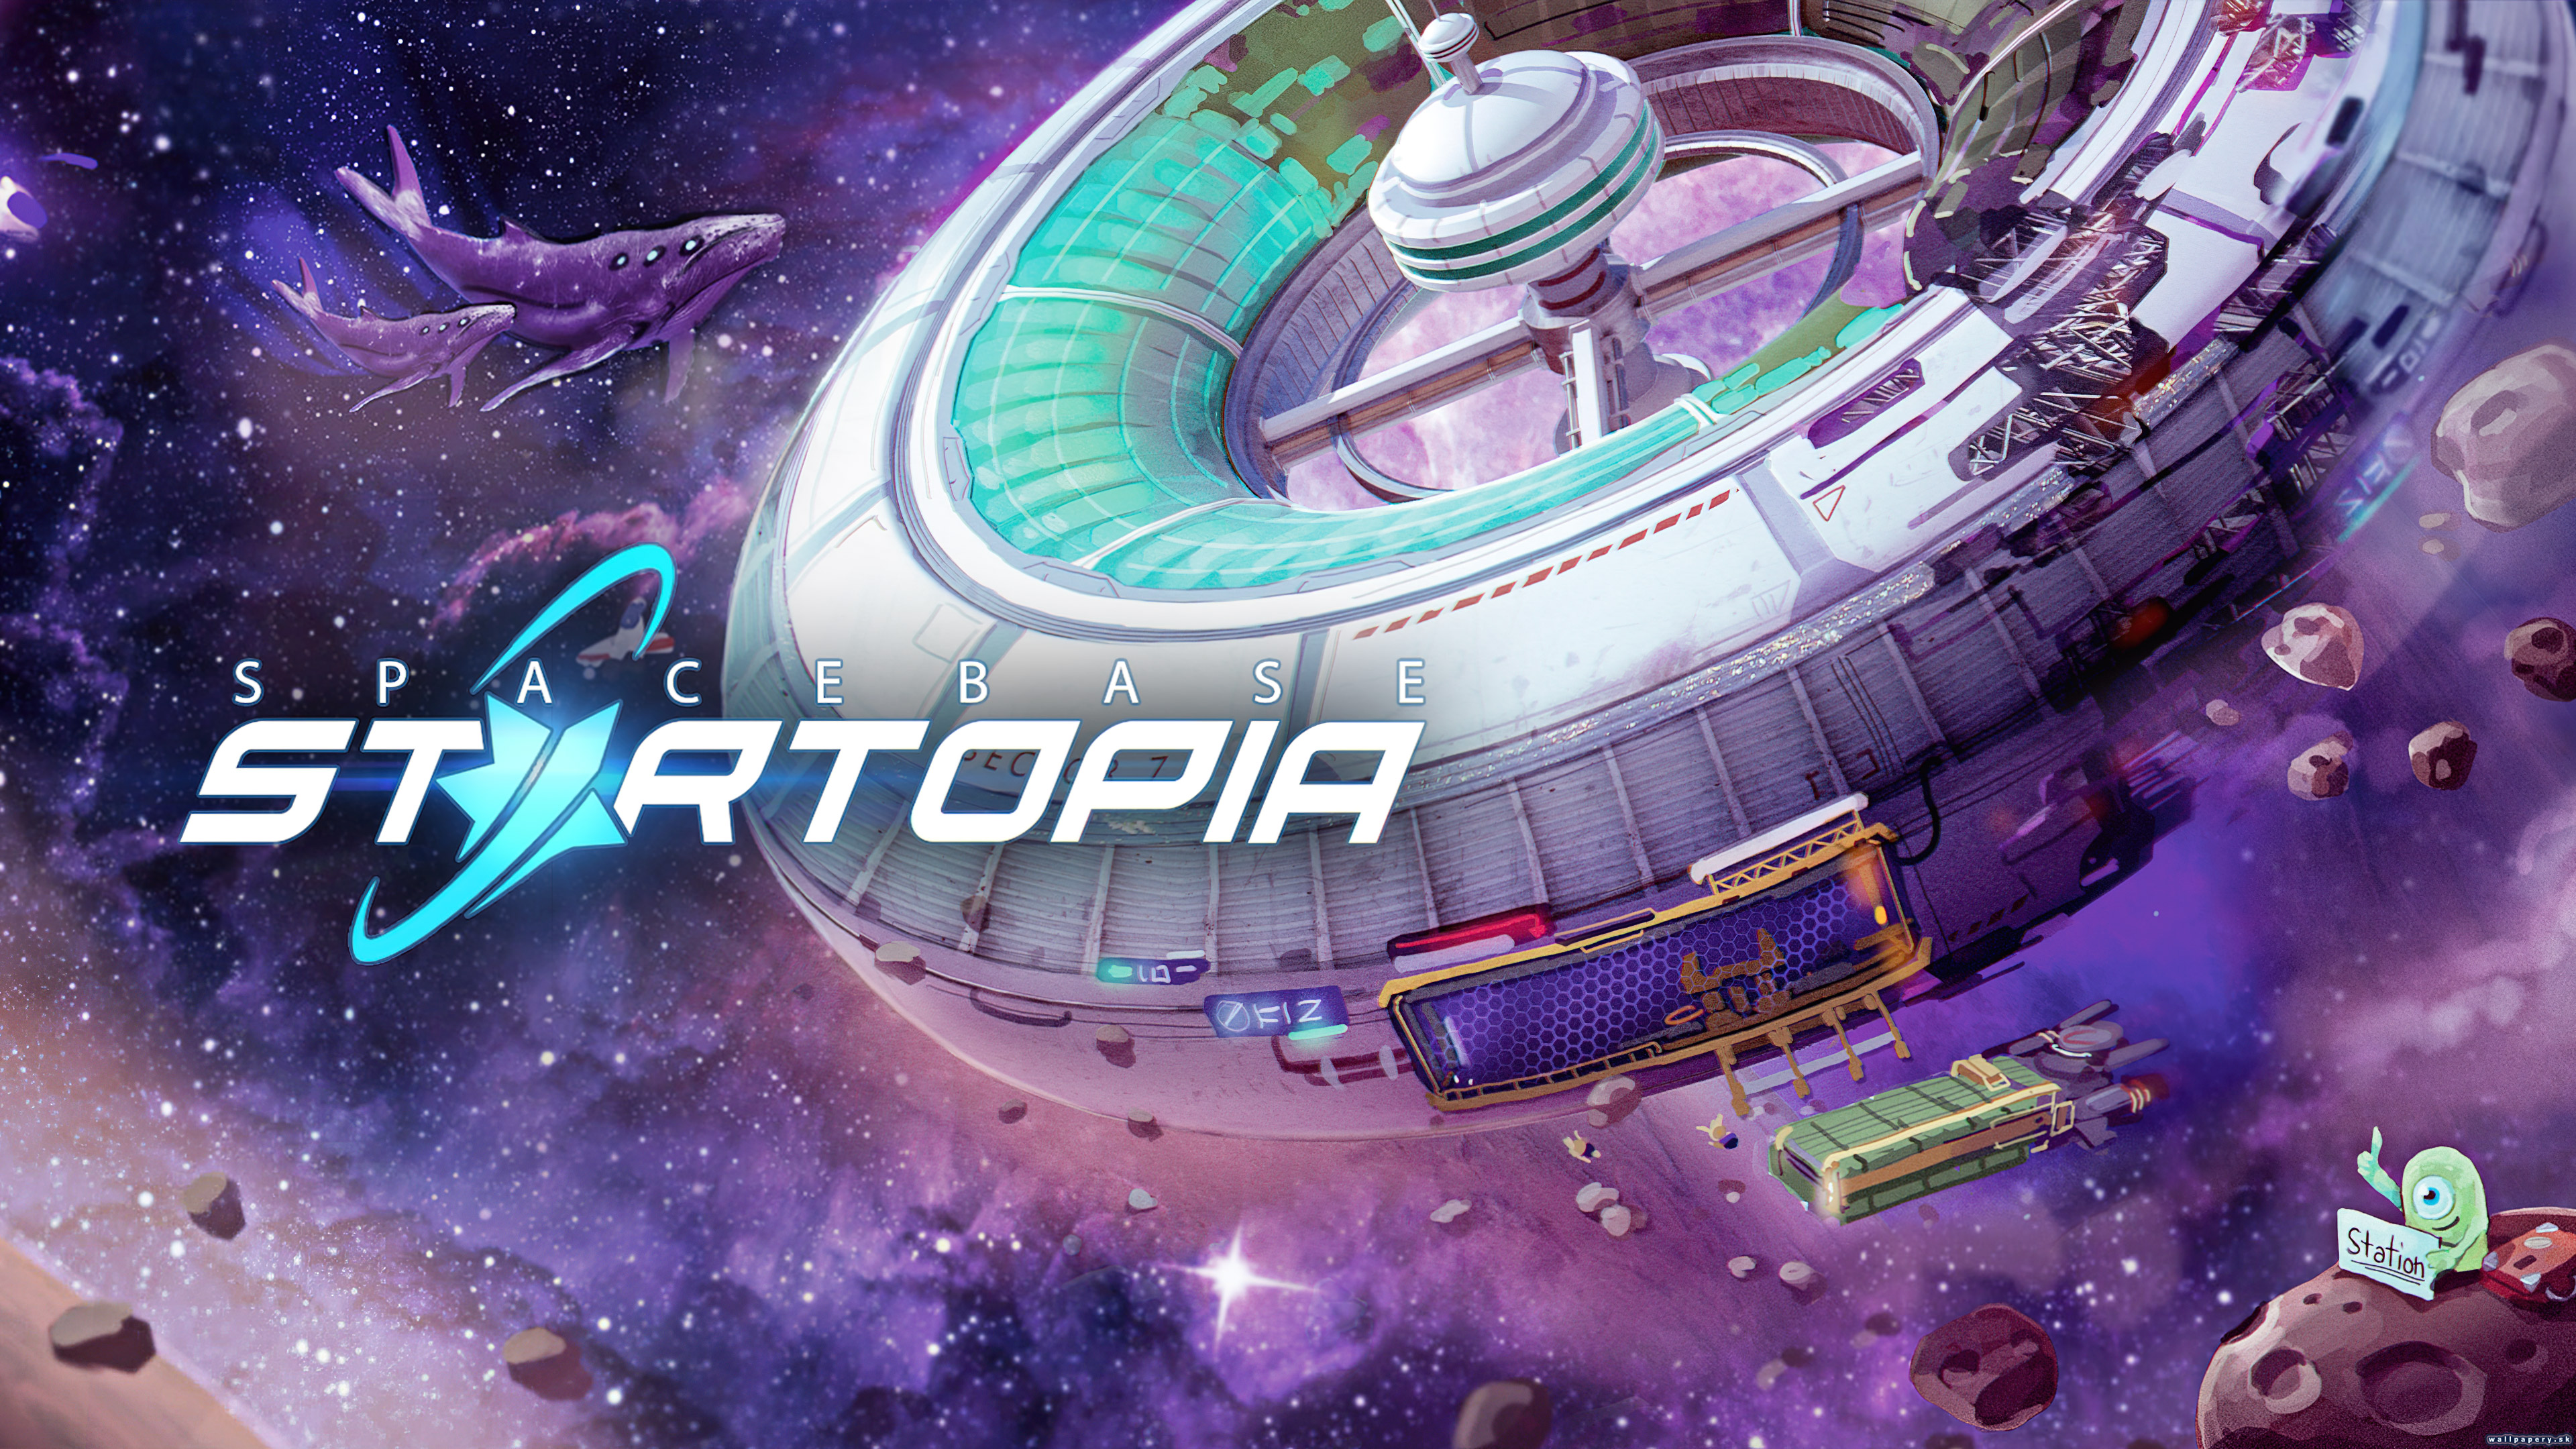 Spacebase Startopia - wallpaper 2